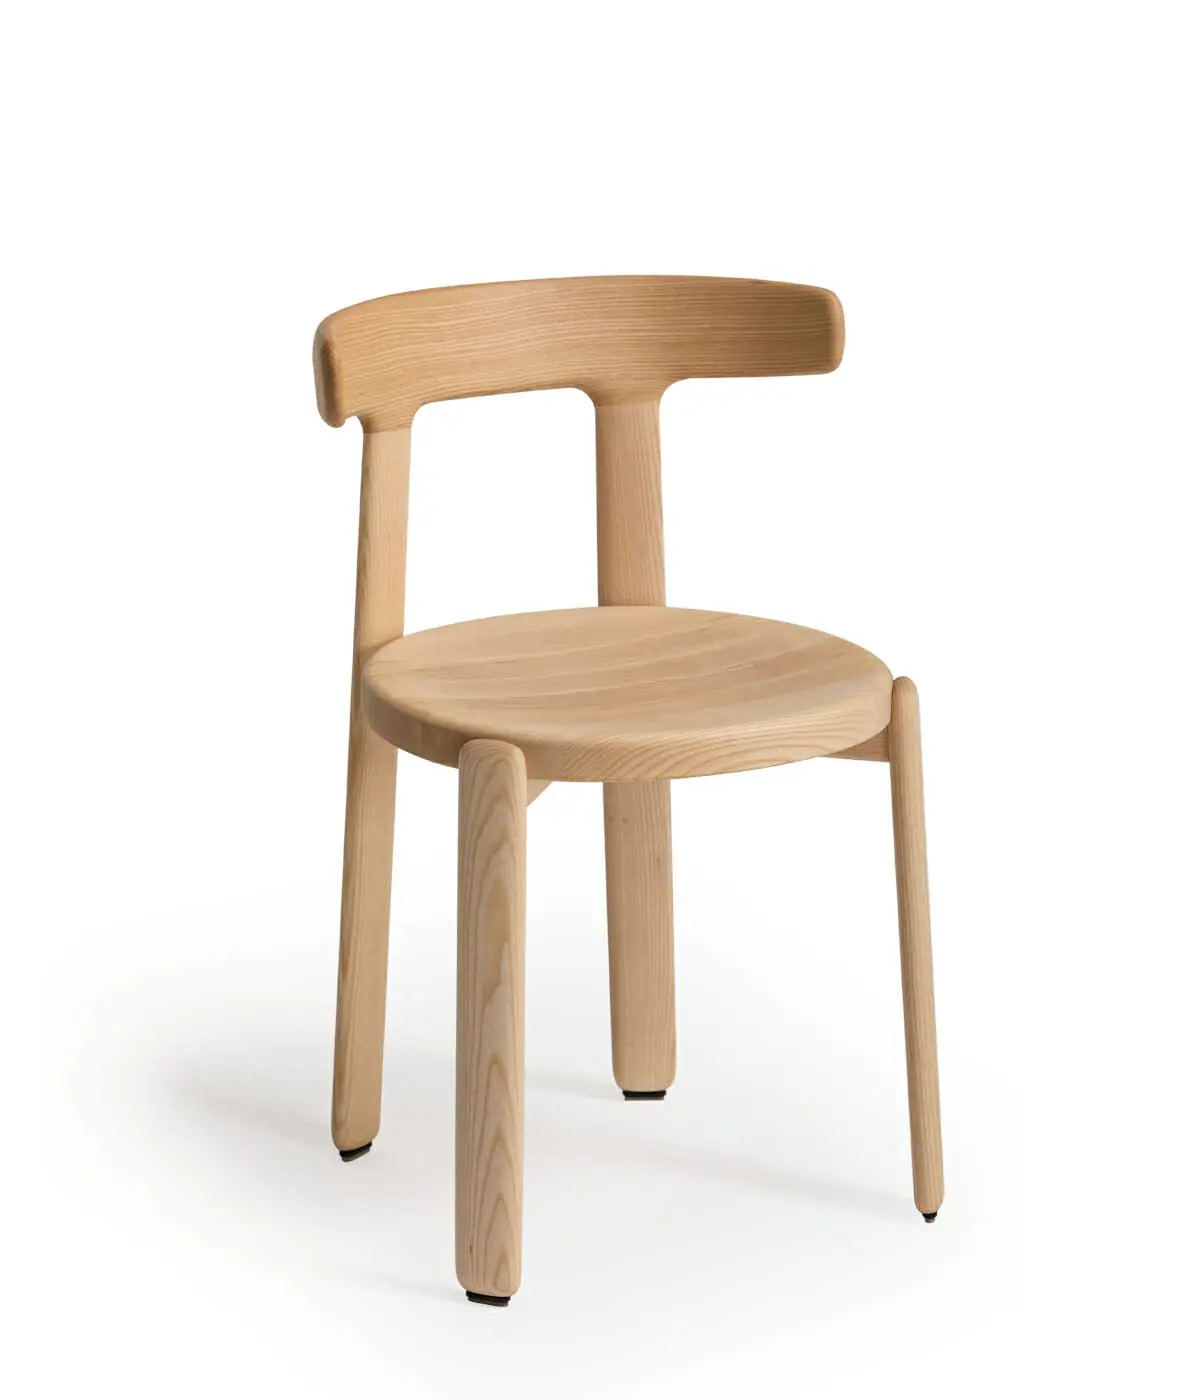 83907-83904-tura-chair-stools